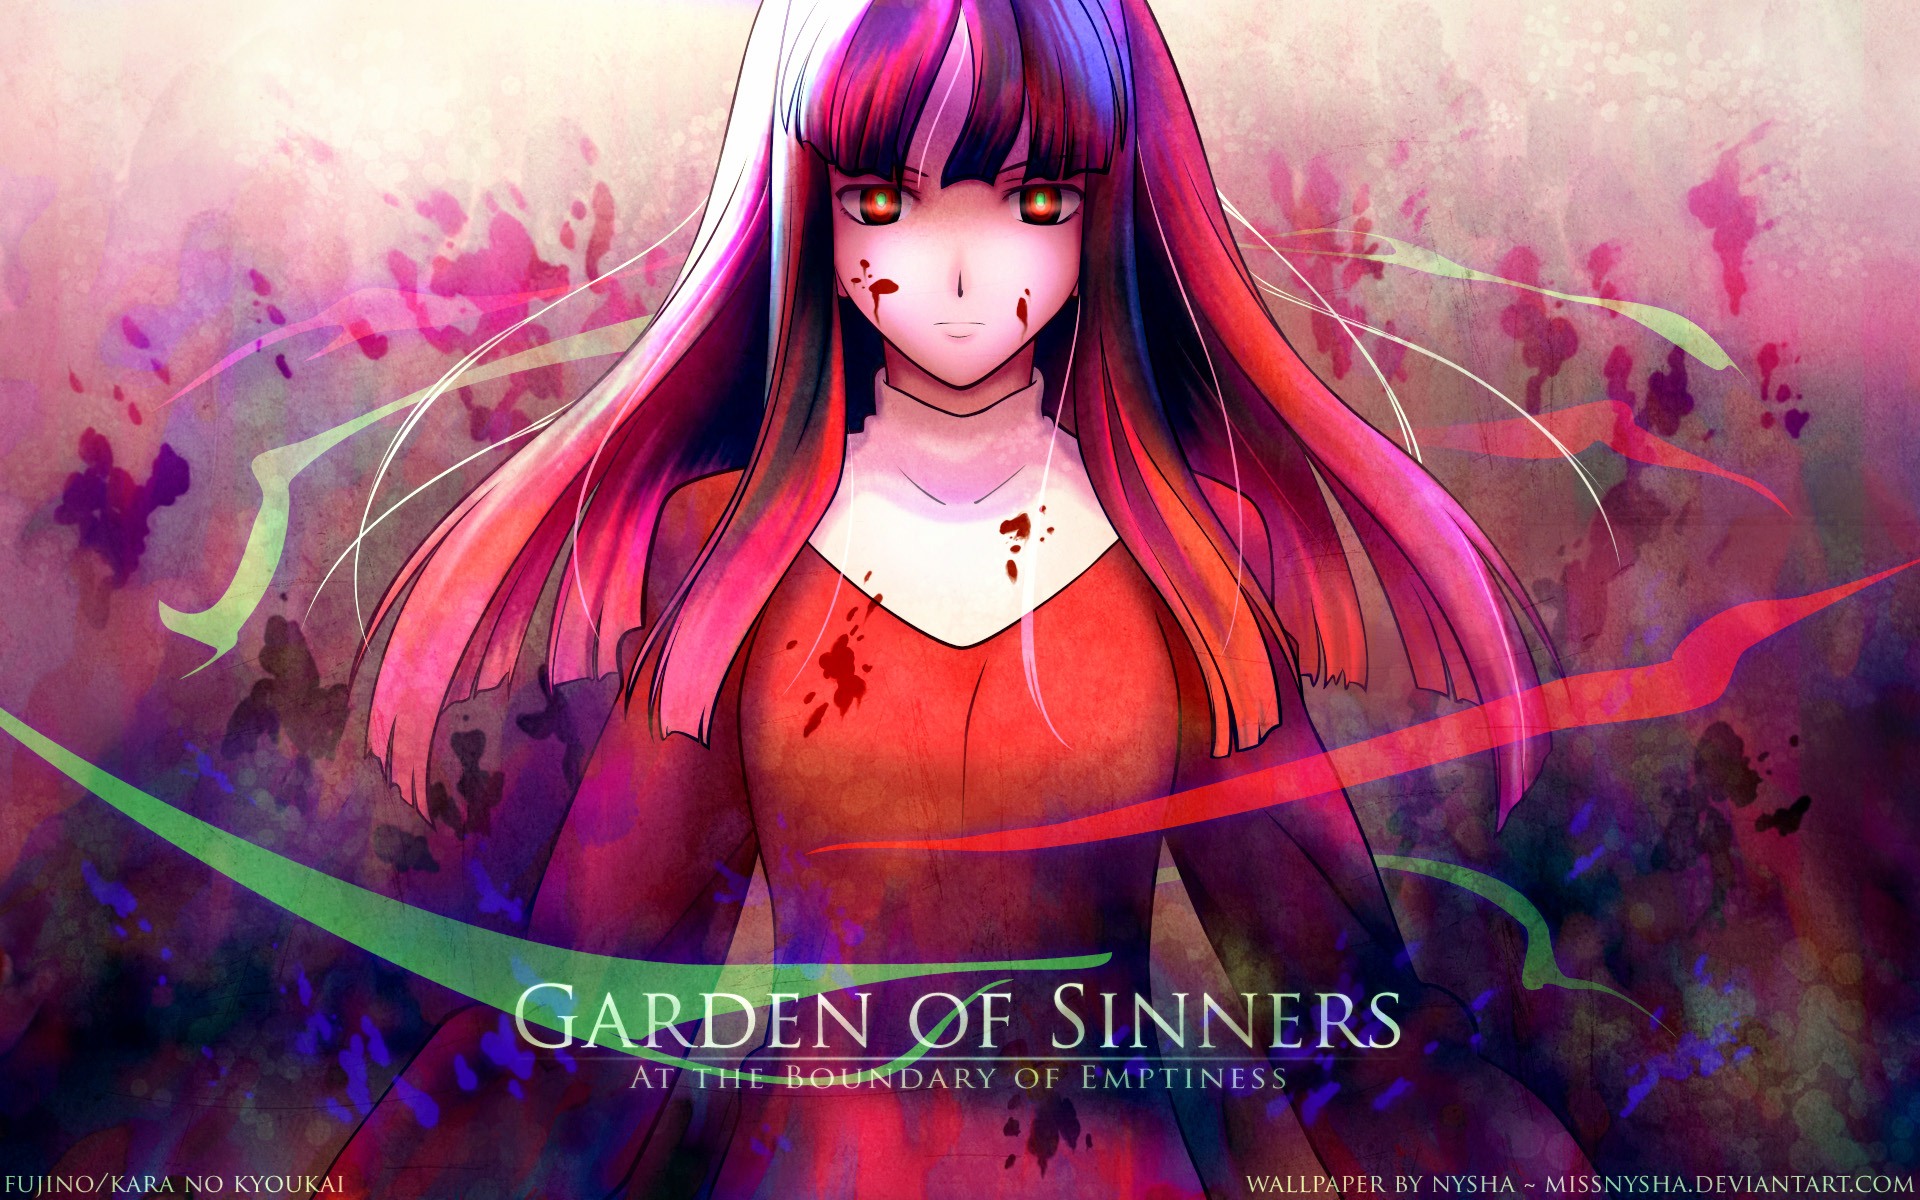 the Garden of sinners HD wallpapers #1 - 1920x1200